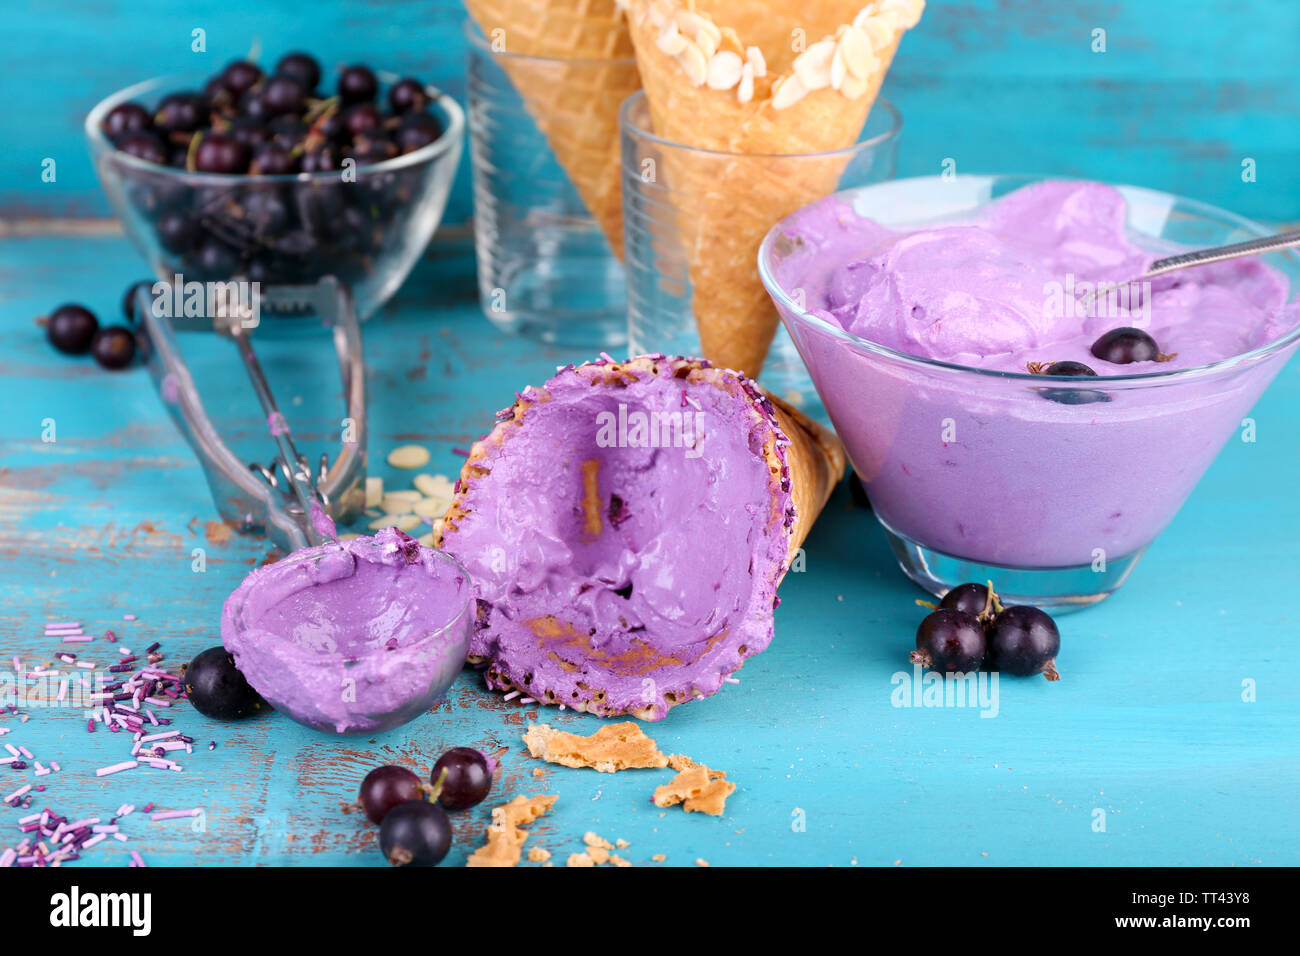 https://c8.alamy.com/comp/TT43Y8/tasty-ice-cream-with-fresh-berries-on-old-blue-wooden-table-TT43Y8.jpg